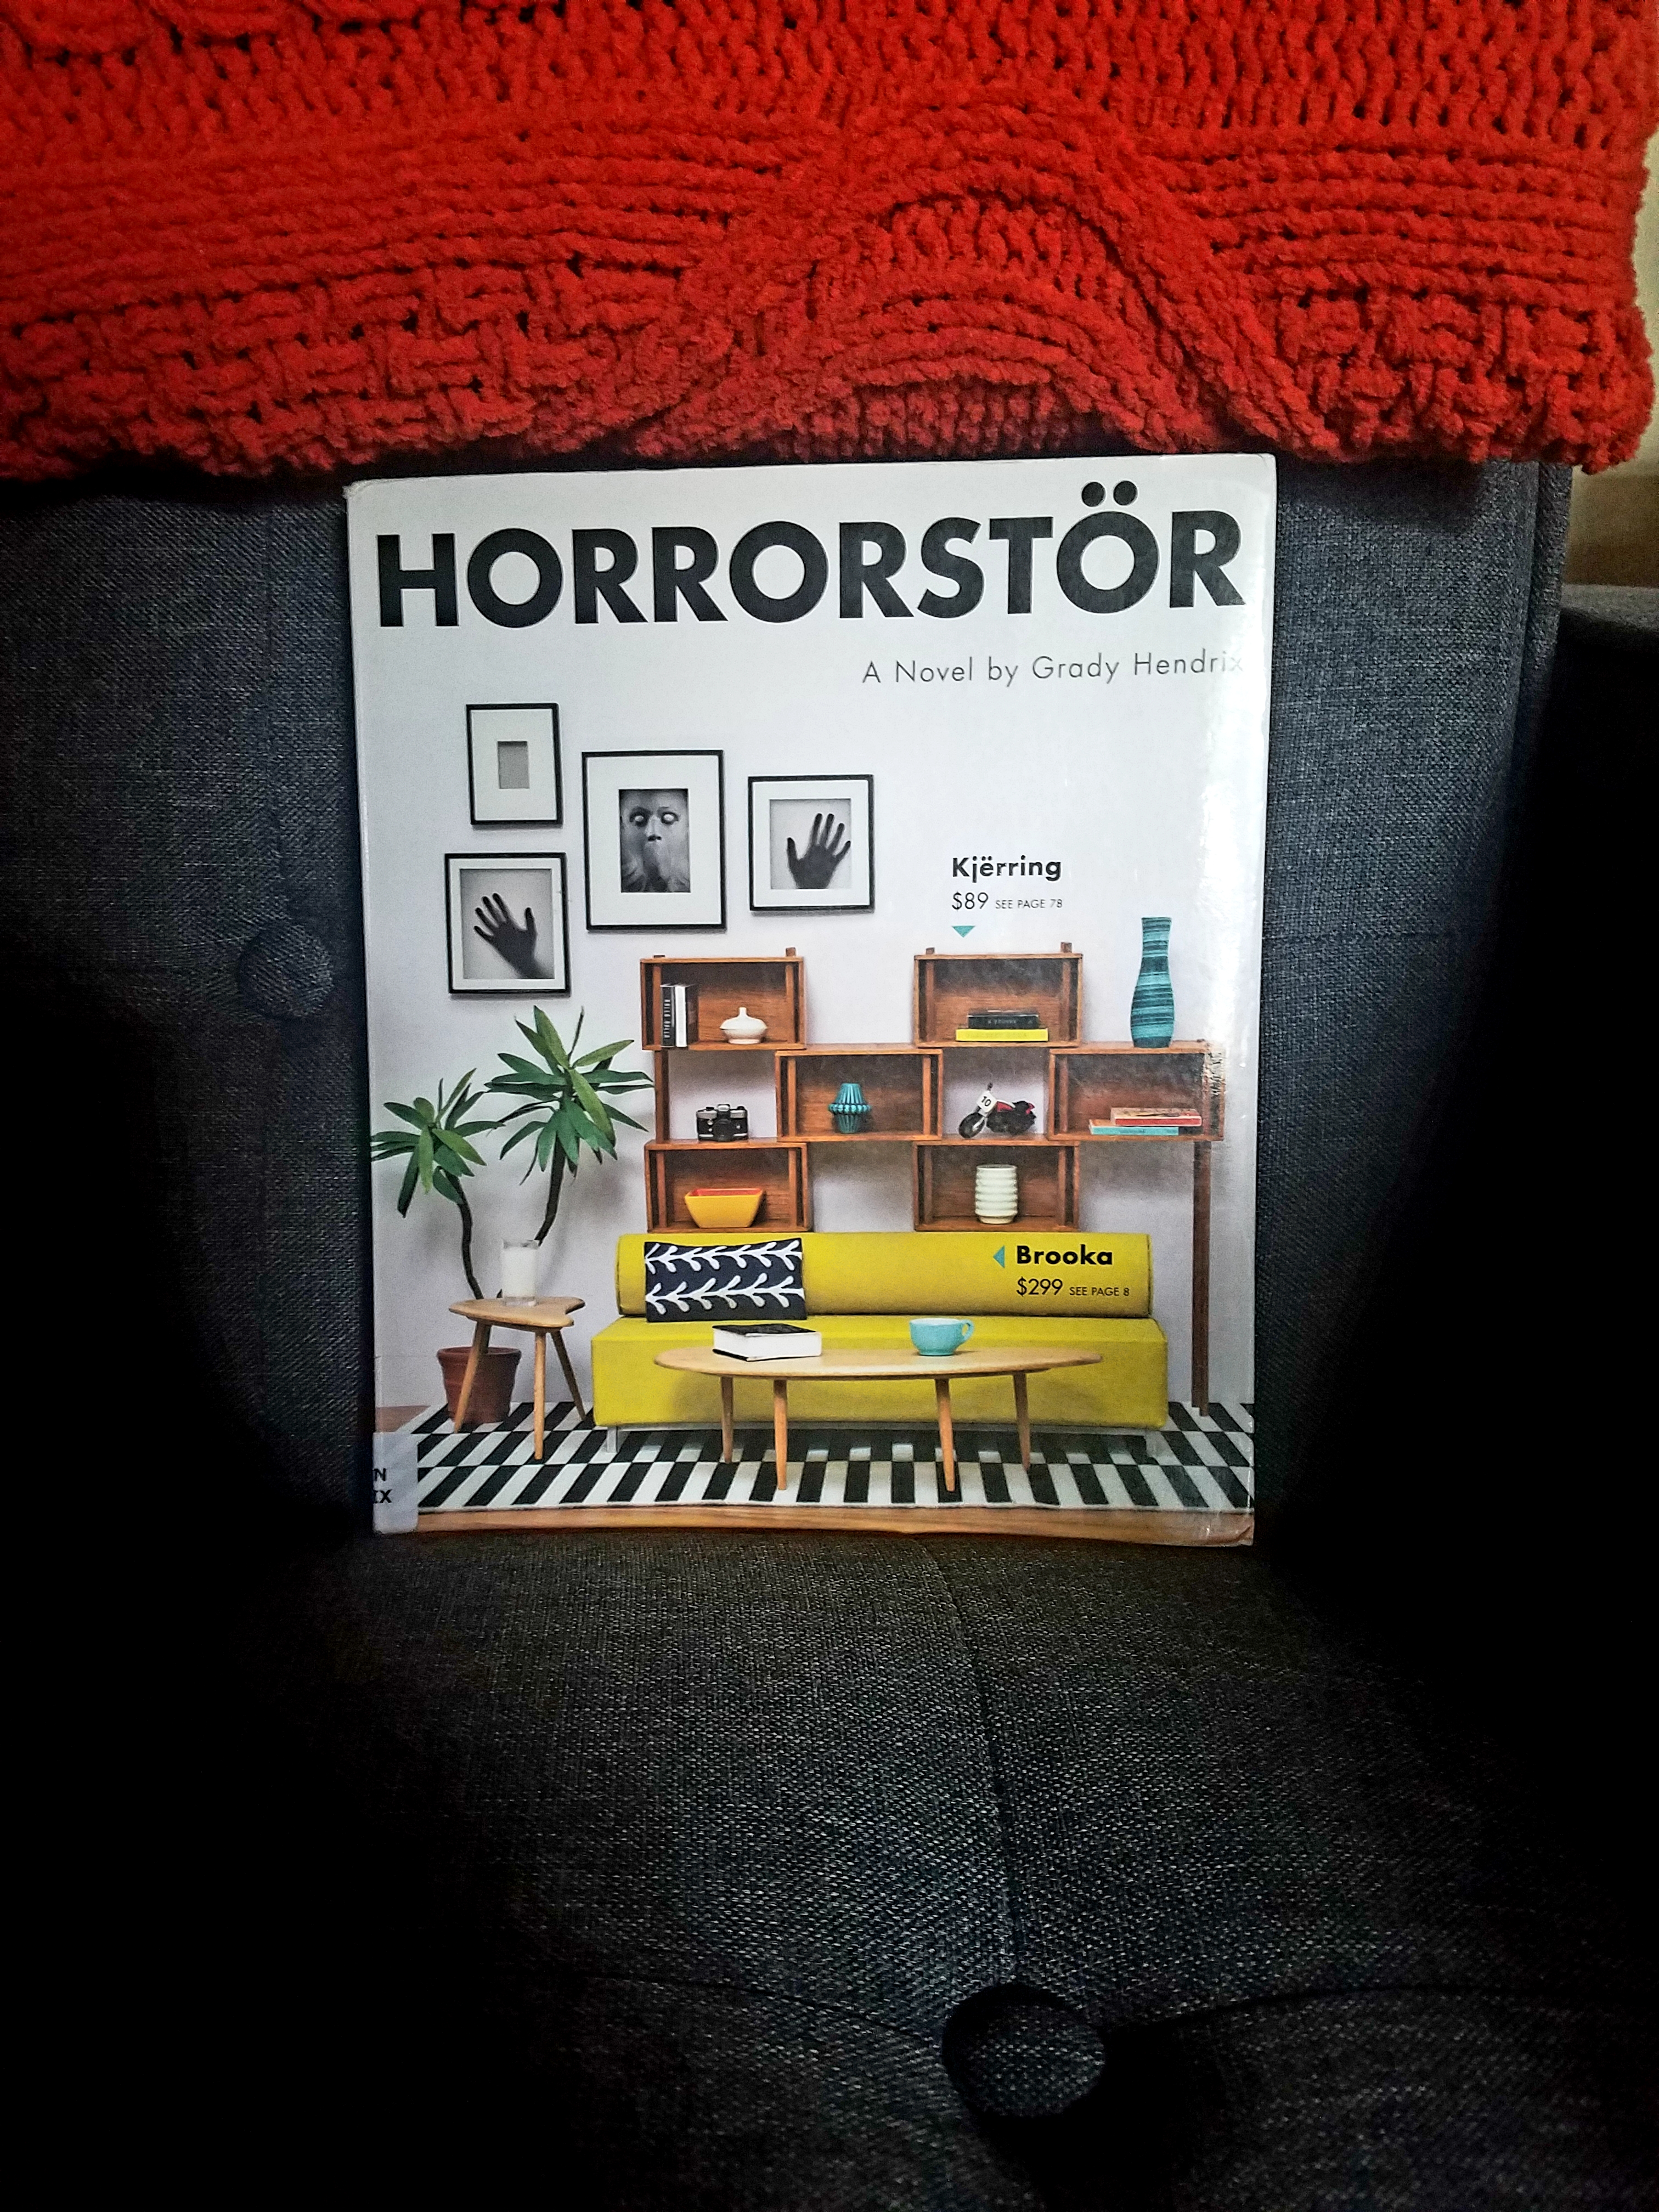 Horrorstor book cover